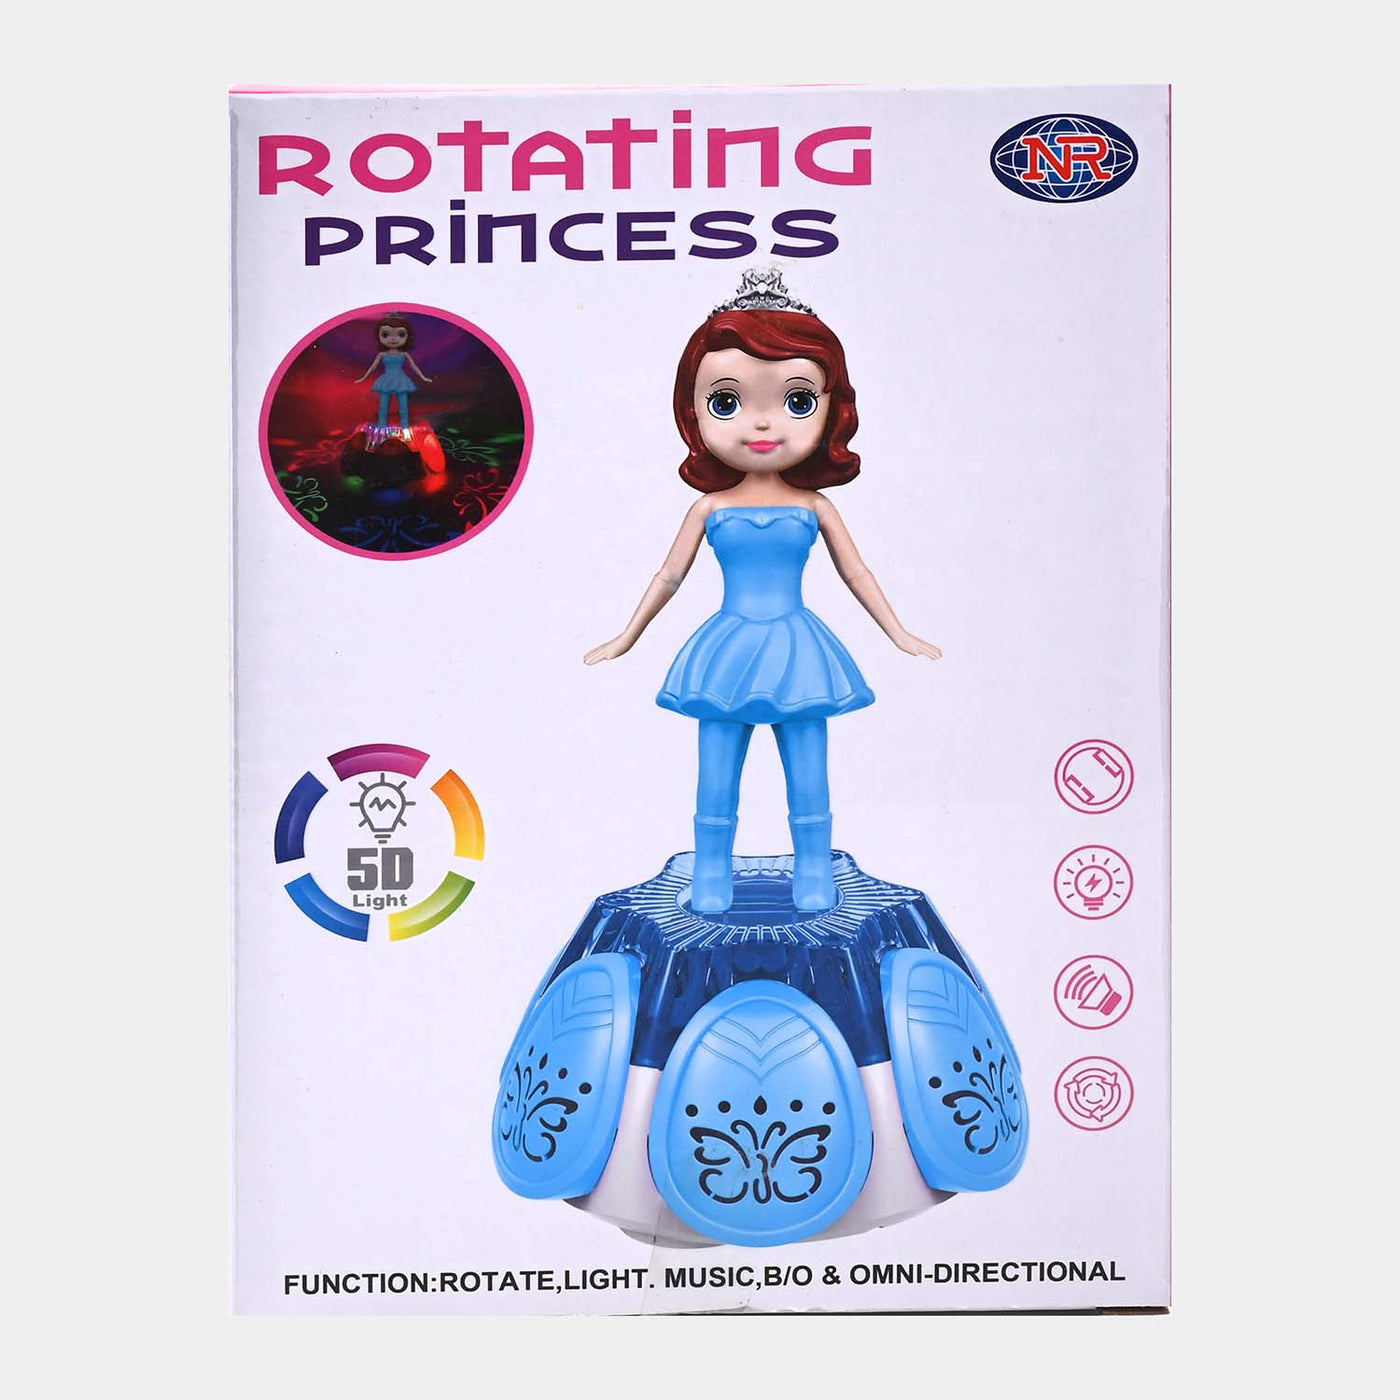 Universal Rotating Princess With Light & Music